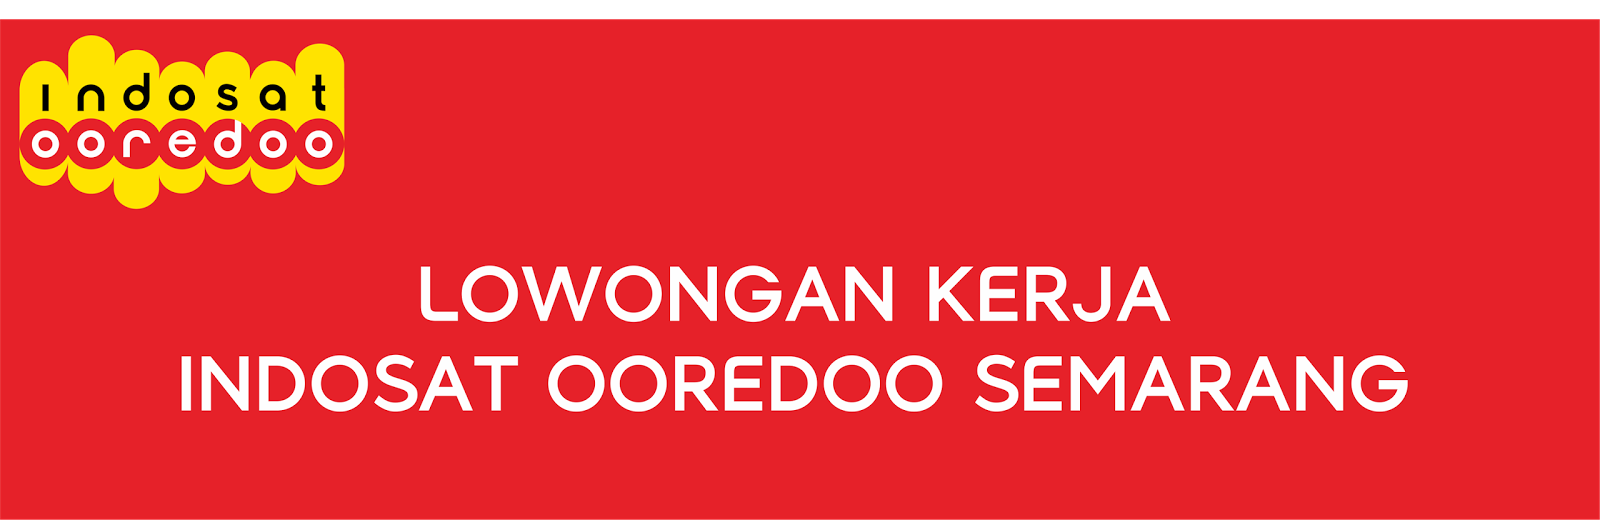 Lowongan Kerja Call Center di Indosat Ooredoo - Semarang 